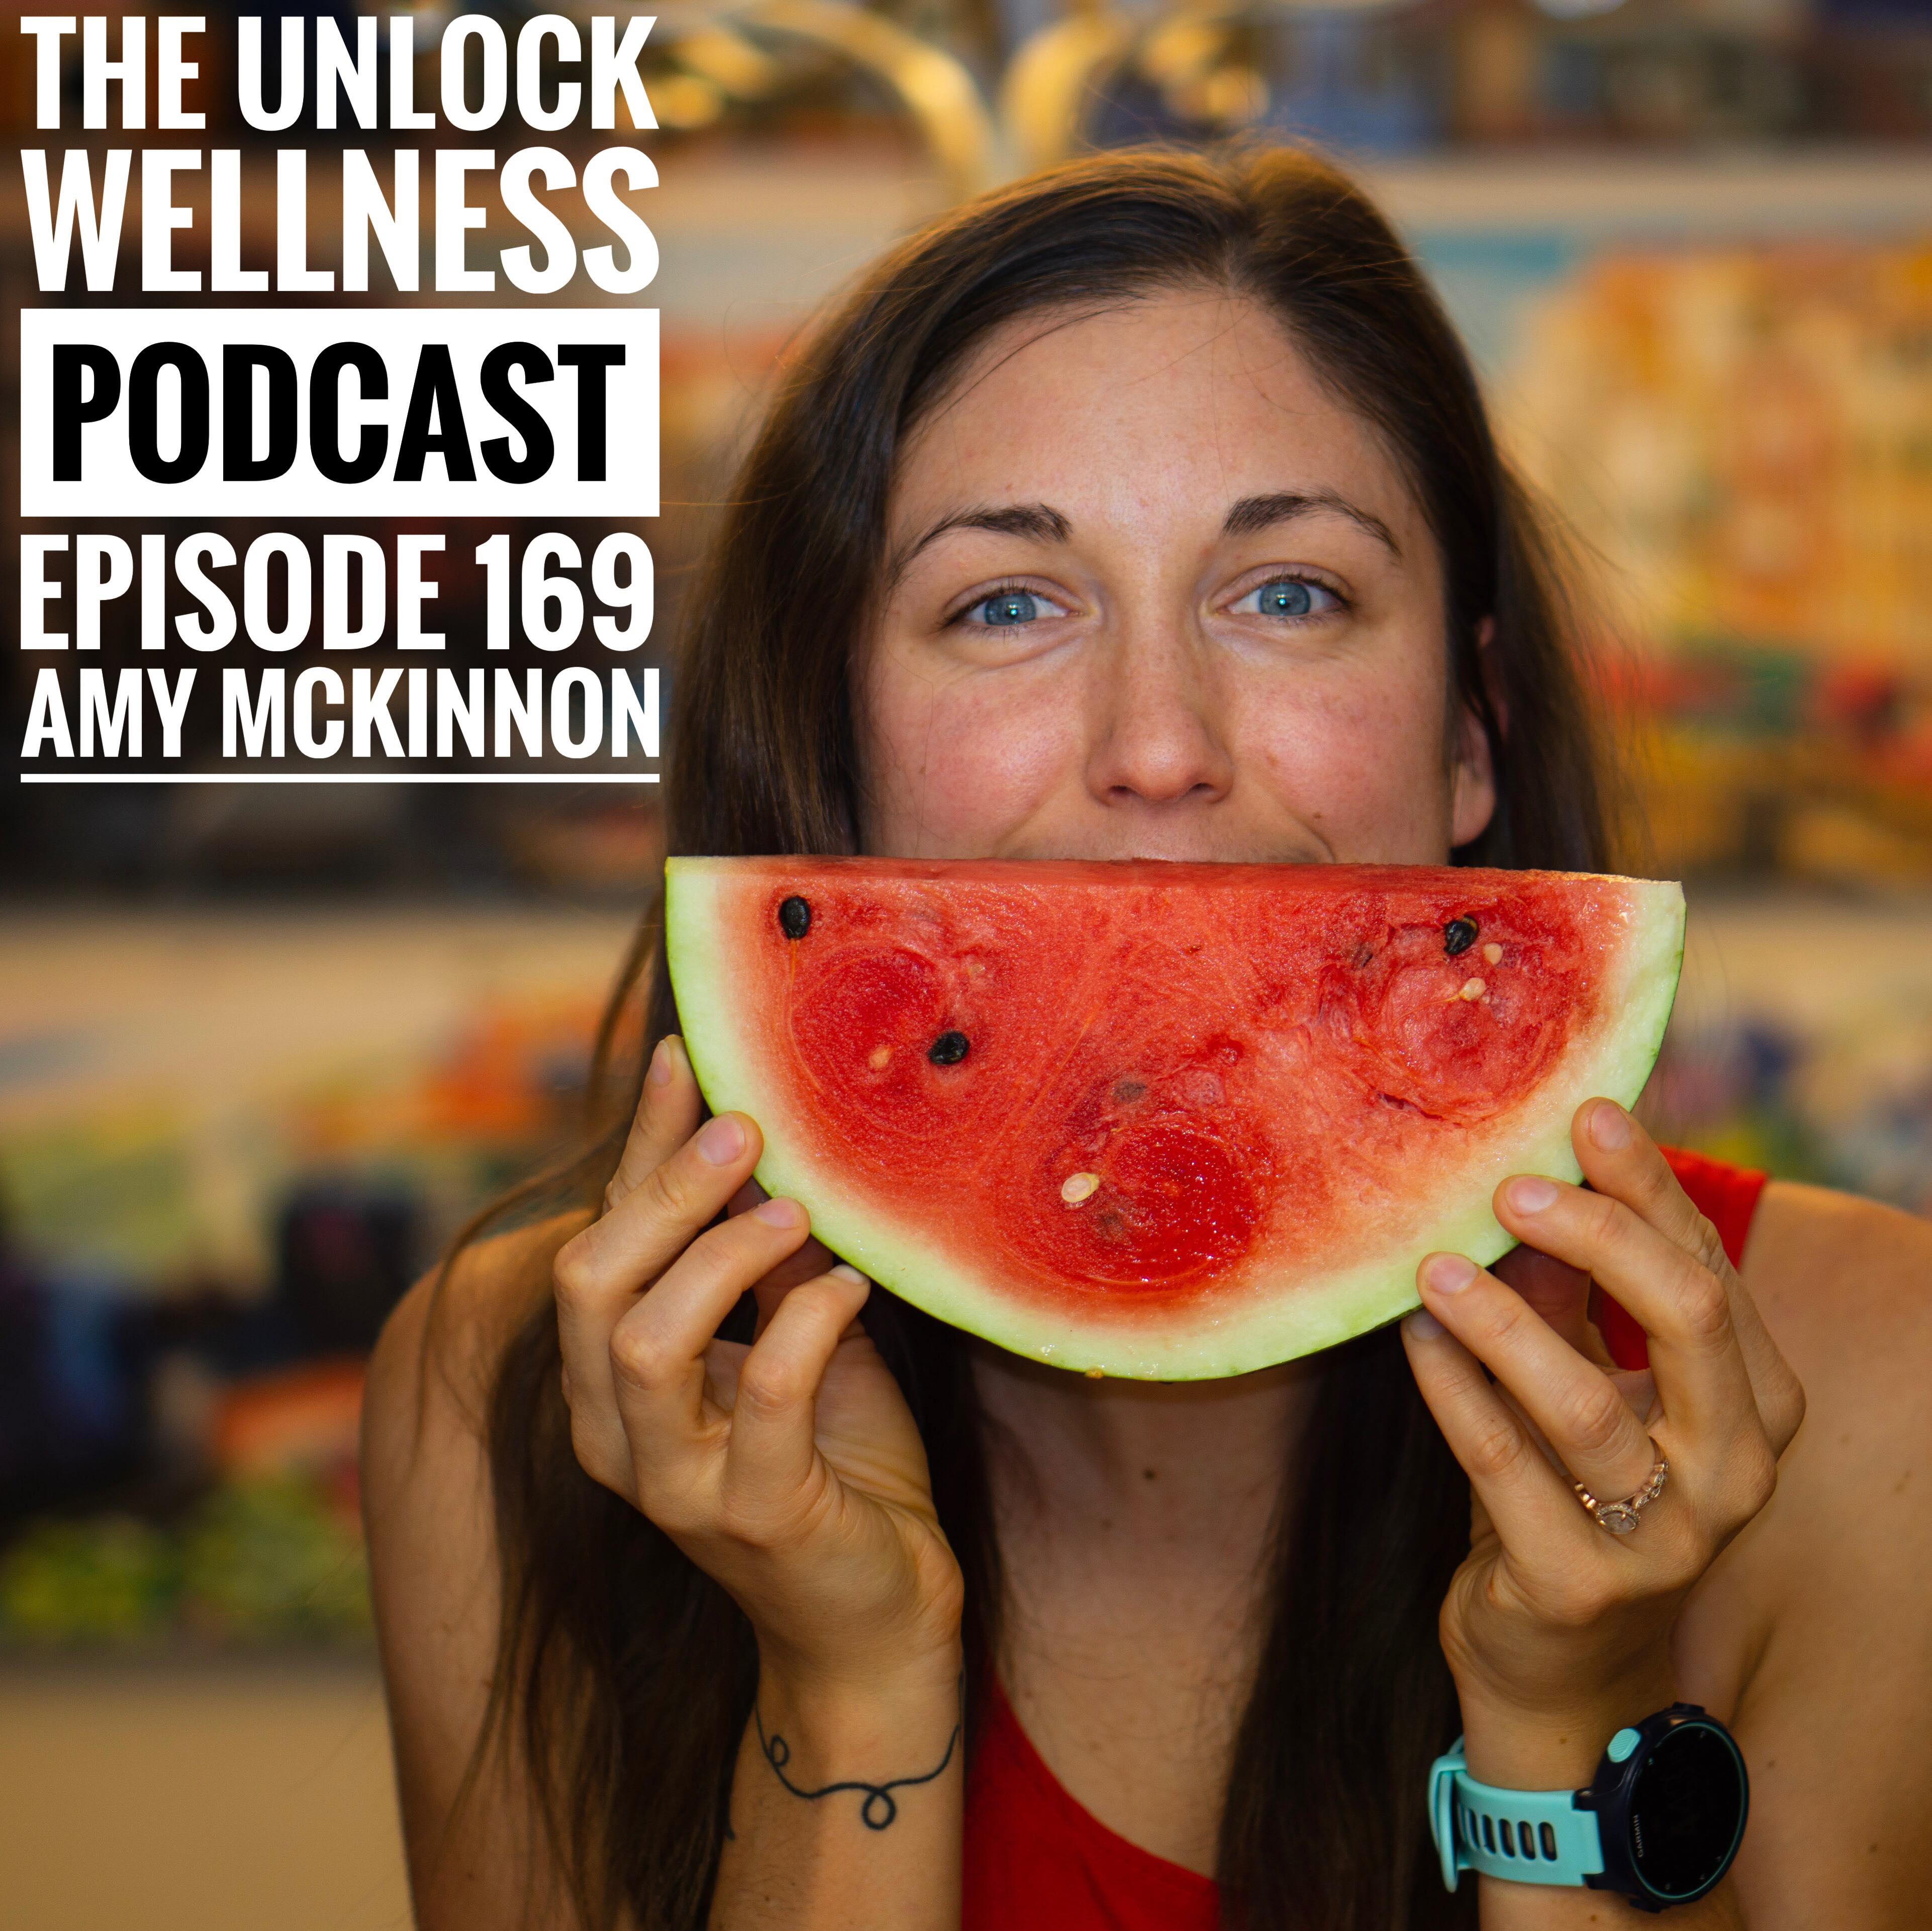 unlock wellness podcast episode